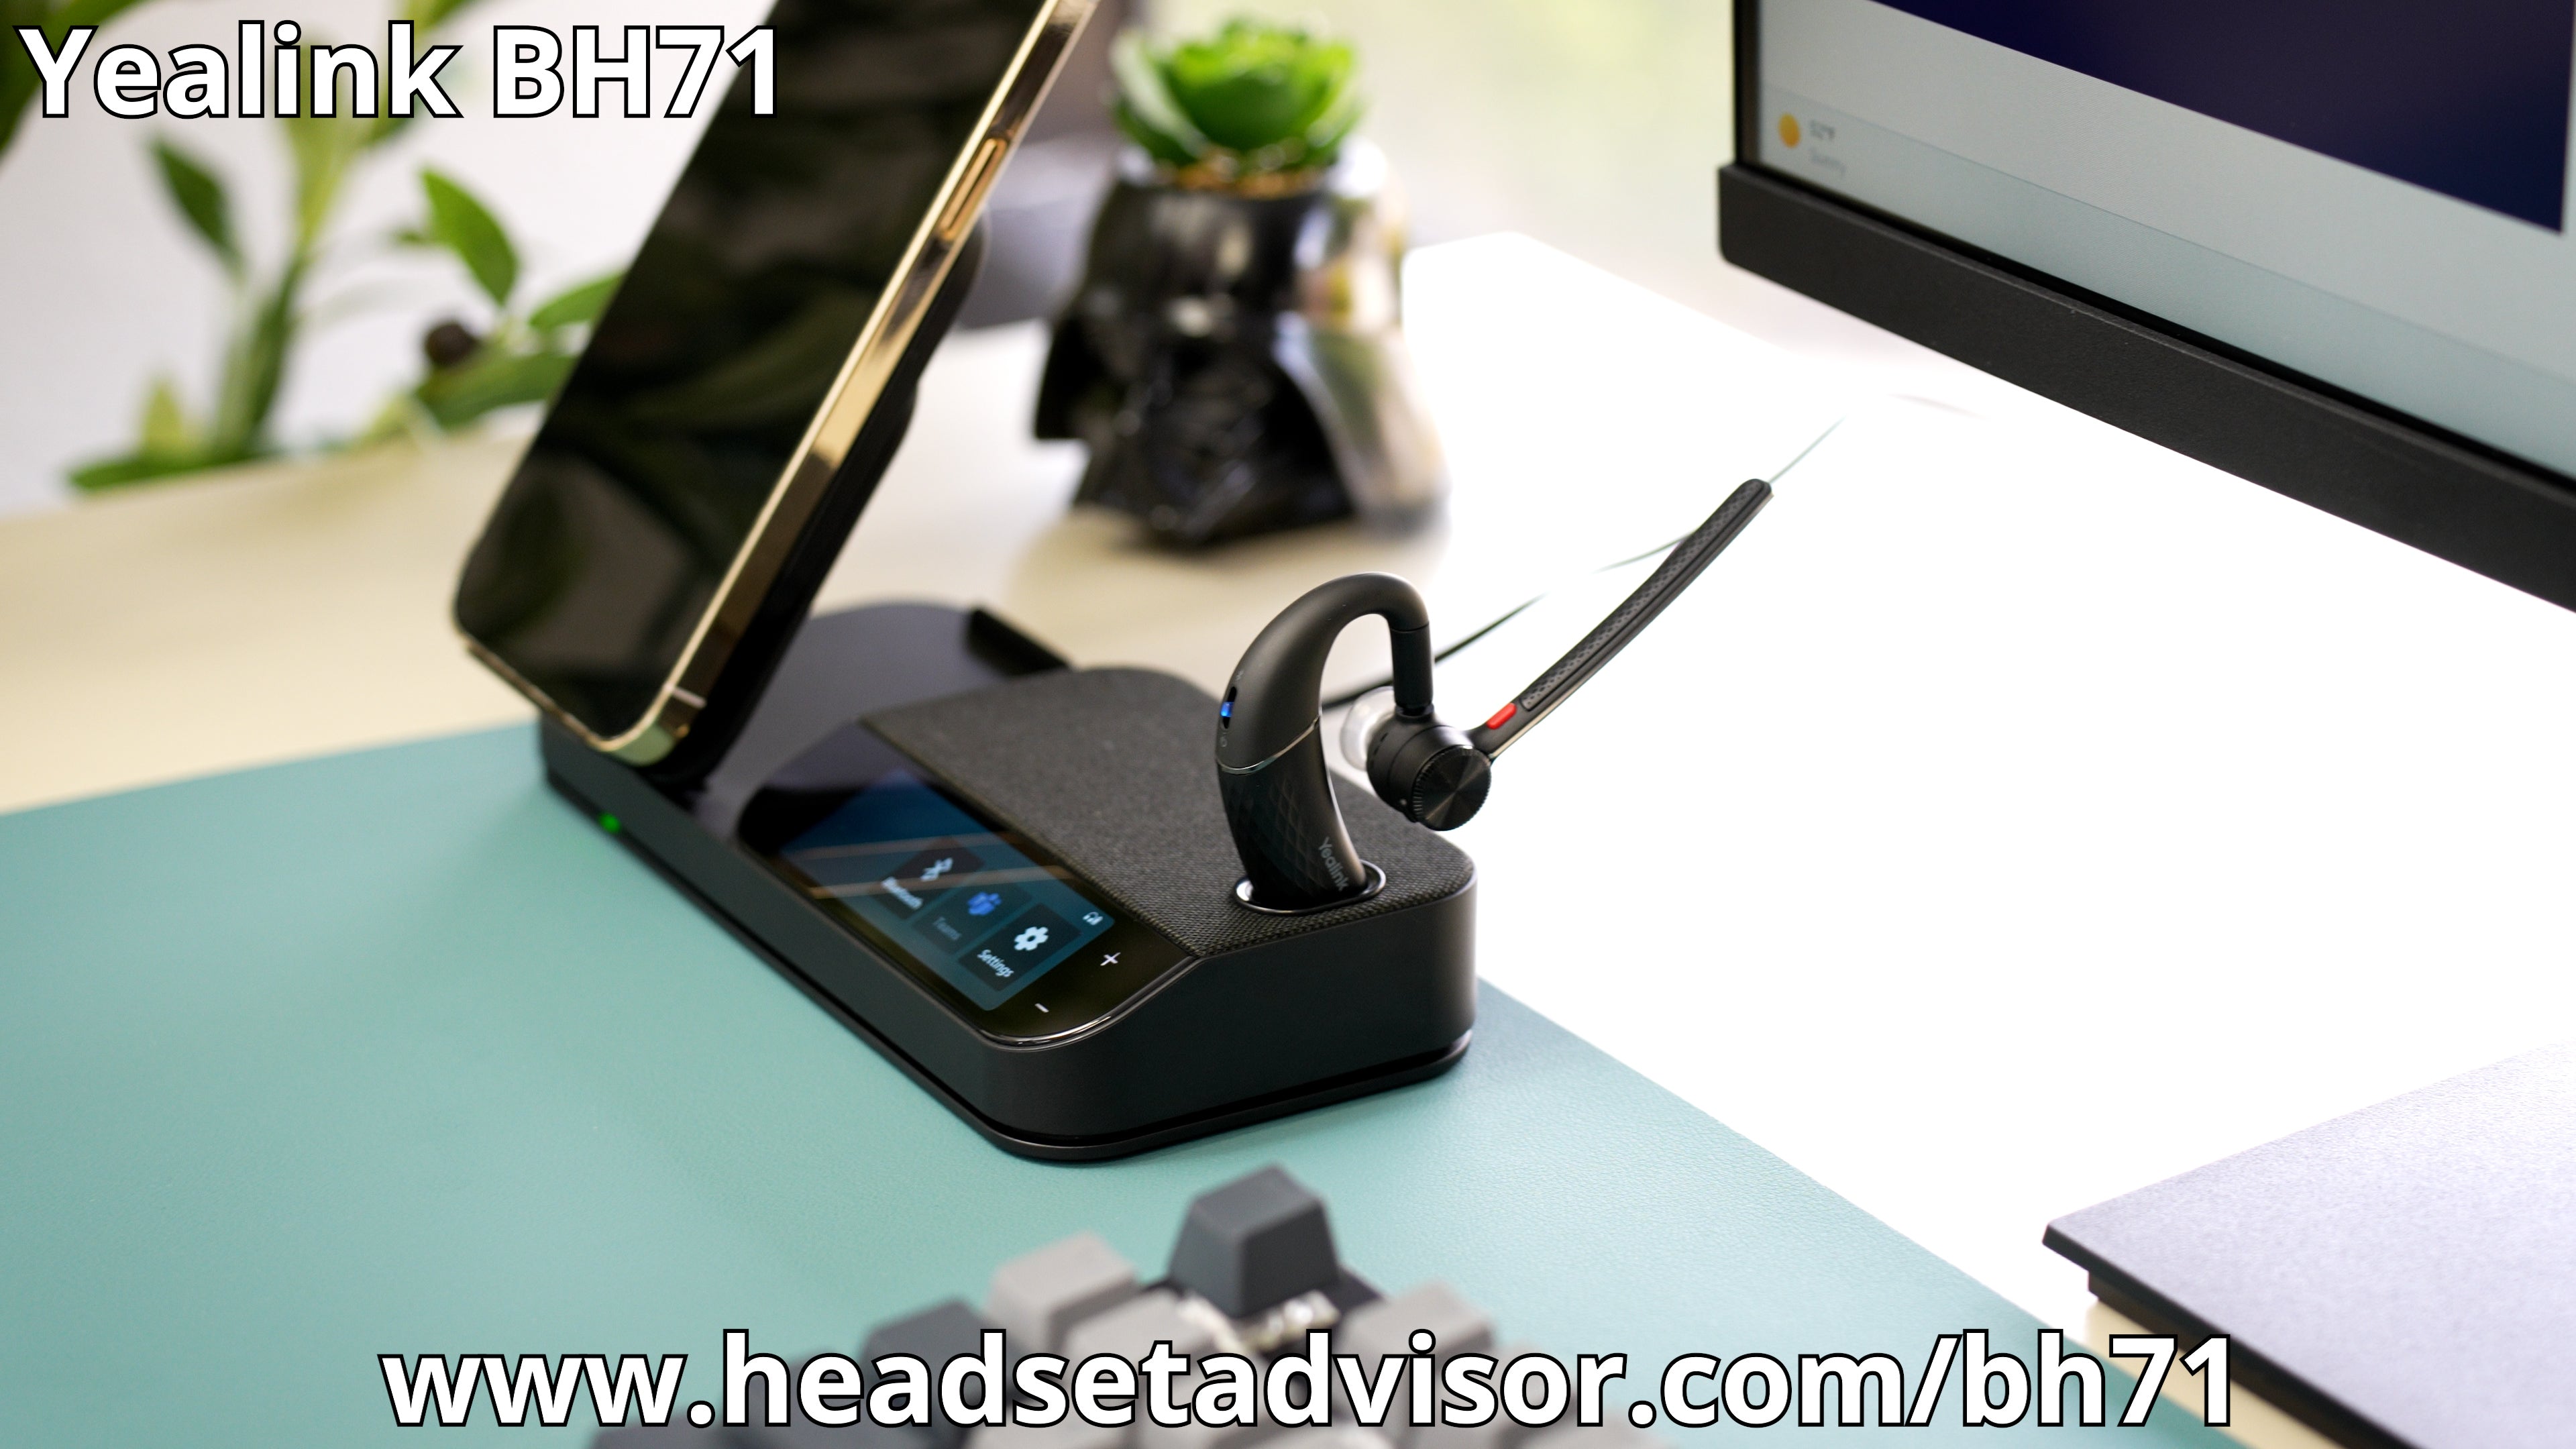 Yealink BH71 - The Most Versatile Bluetooth Wireless Headset For Work - Headset Advisor